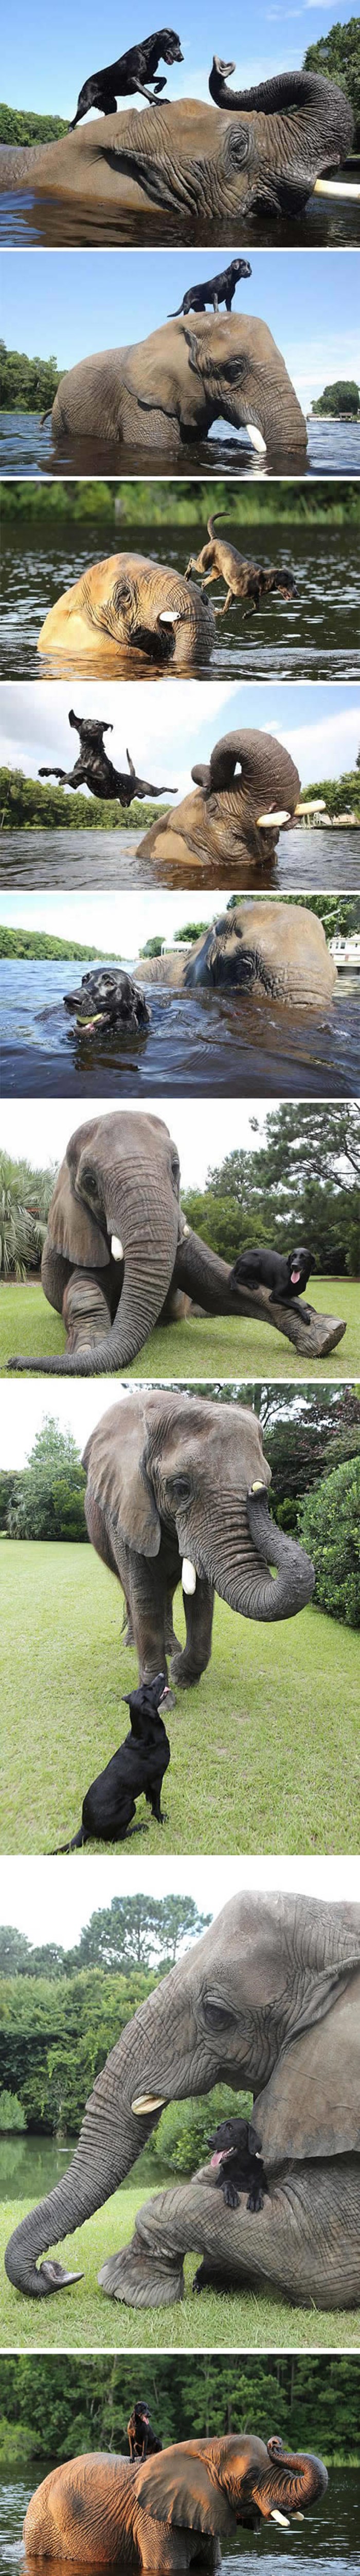 Veseli pas i njegov slonofrend postali apsolutno nerazdvojni